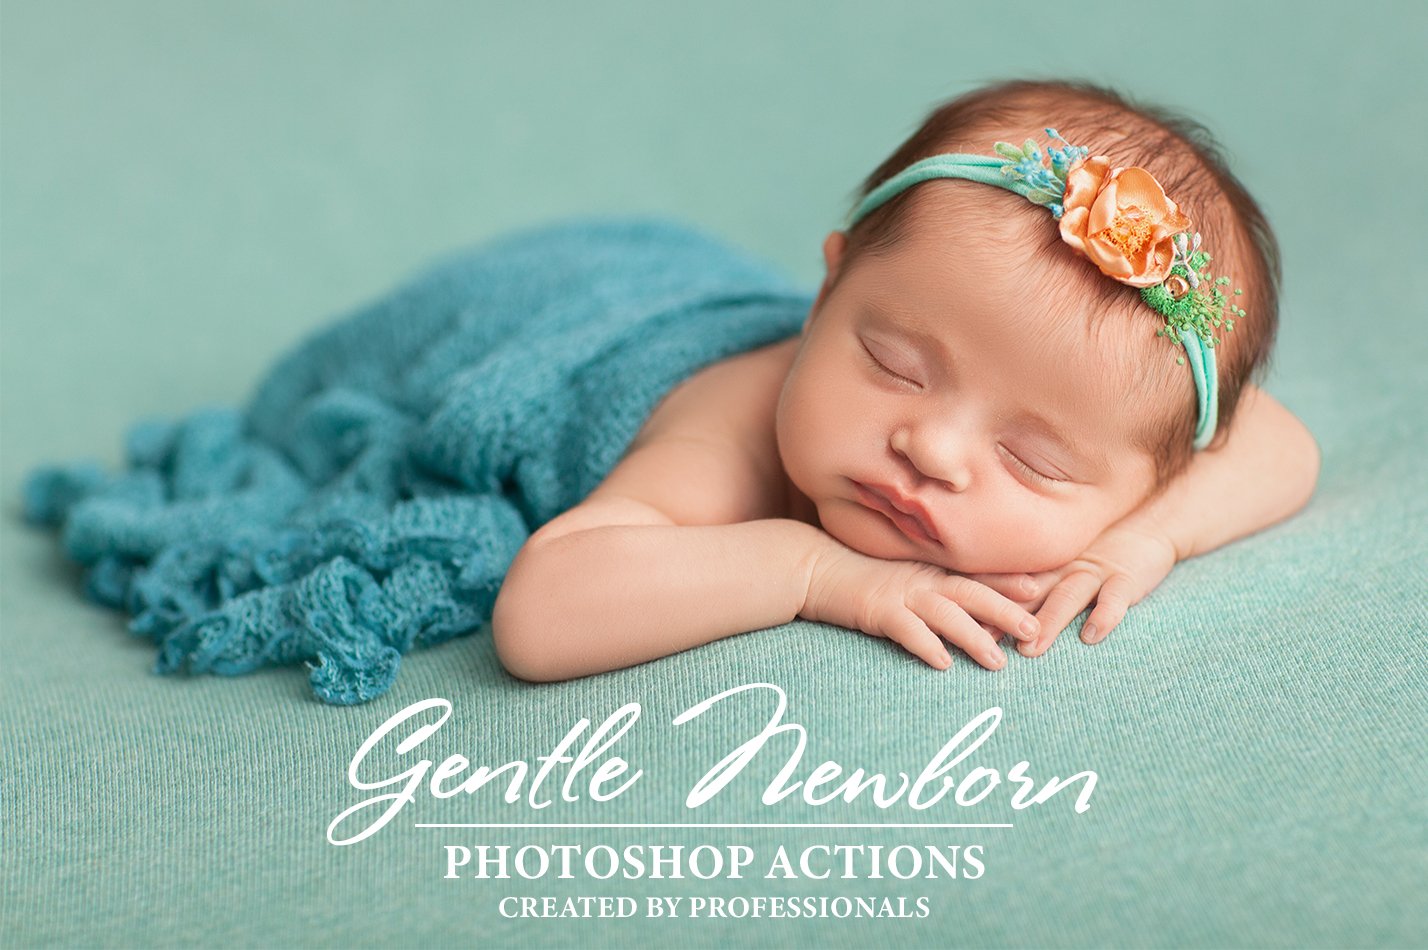 Gentle Newborn Photoshop Actionscover image.